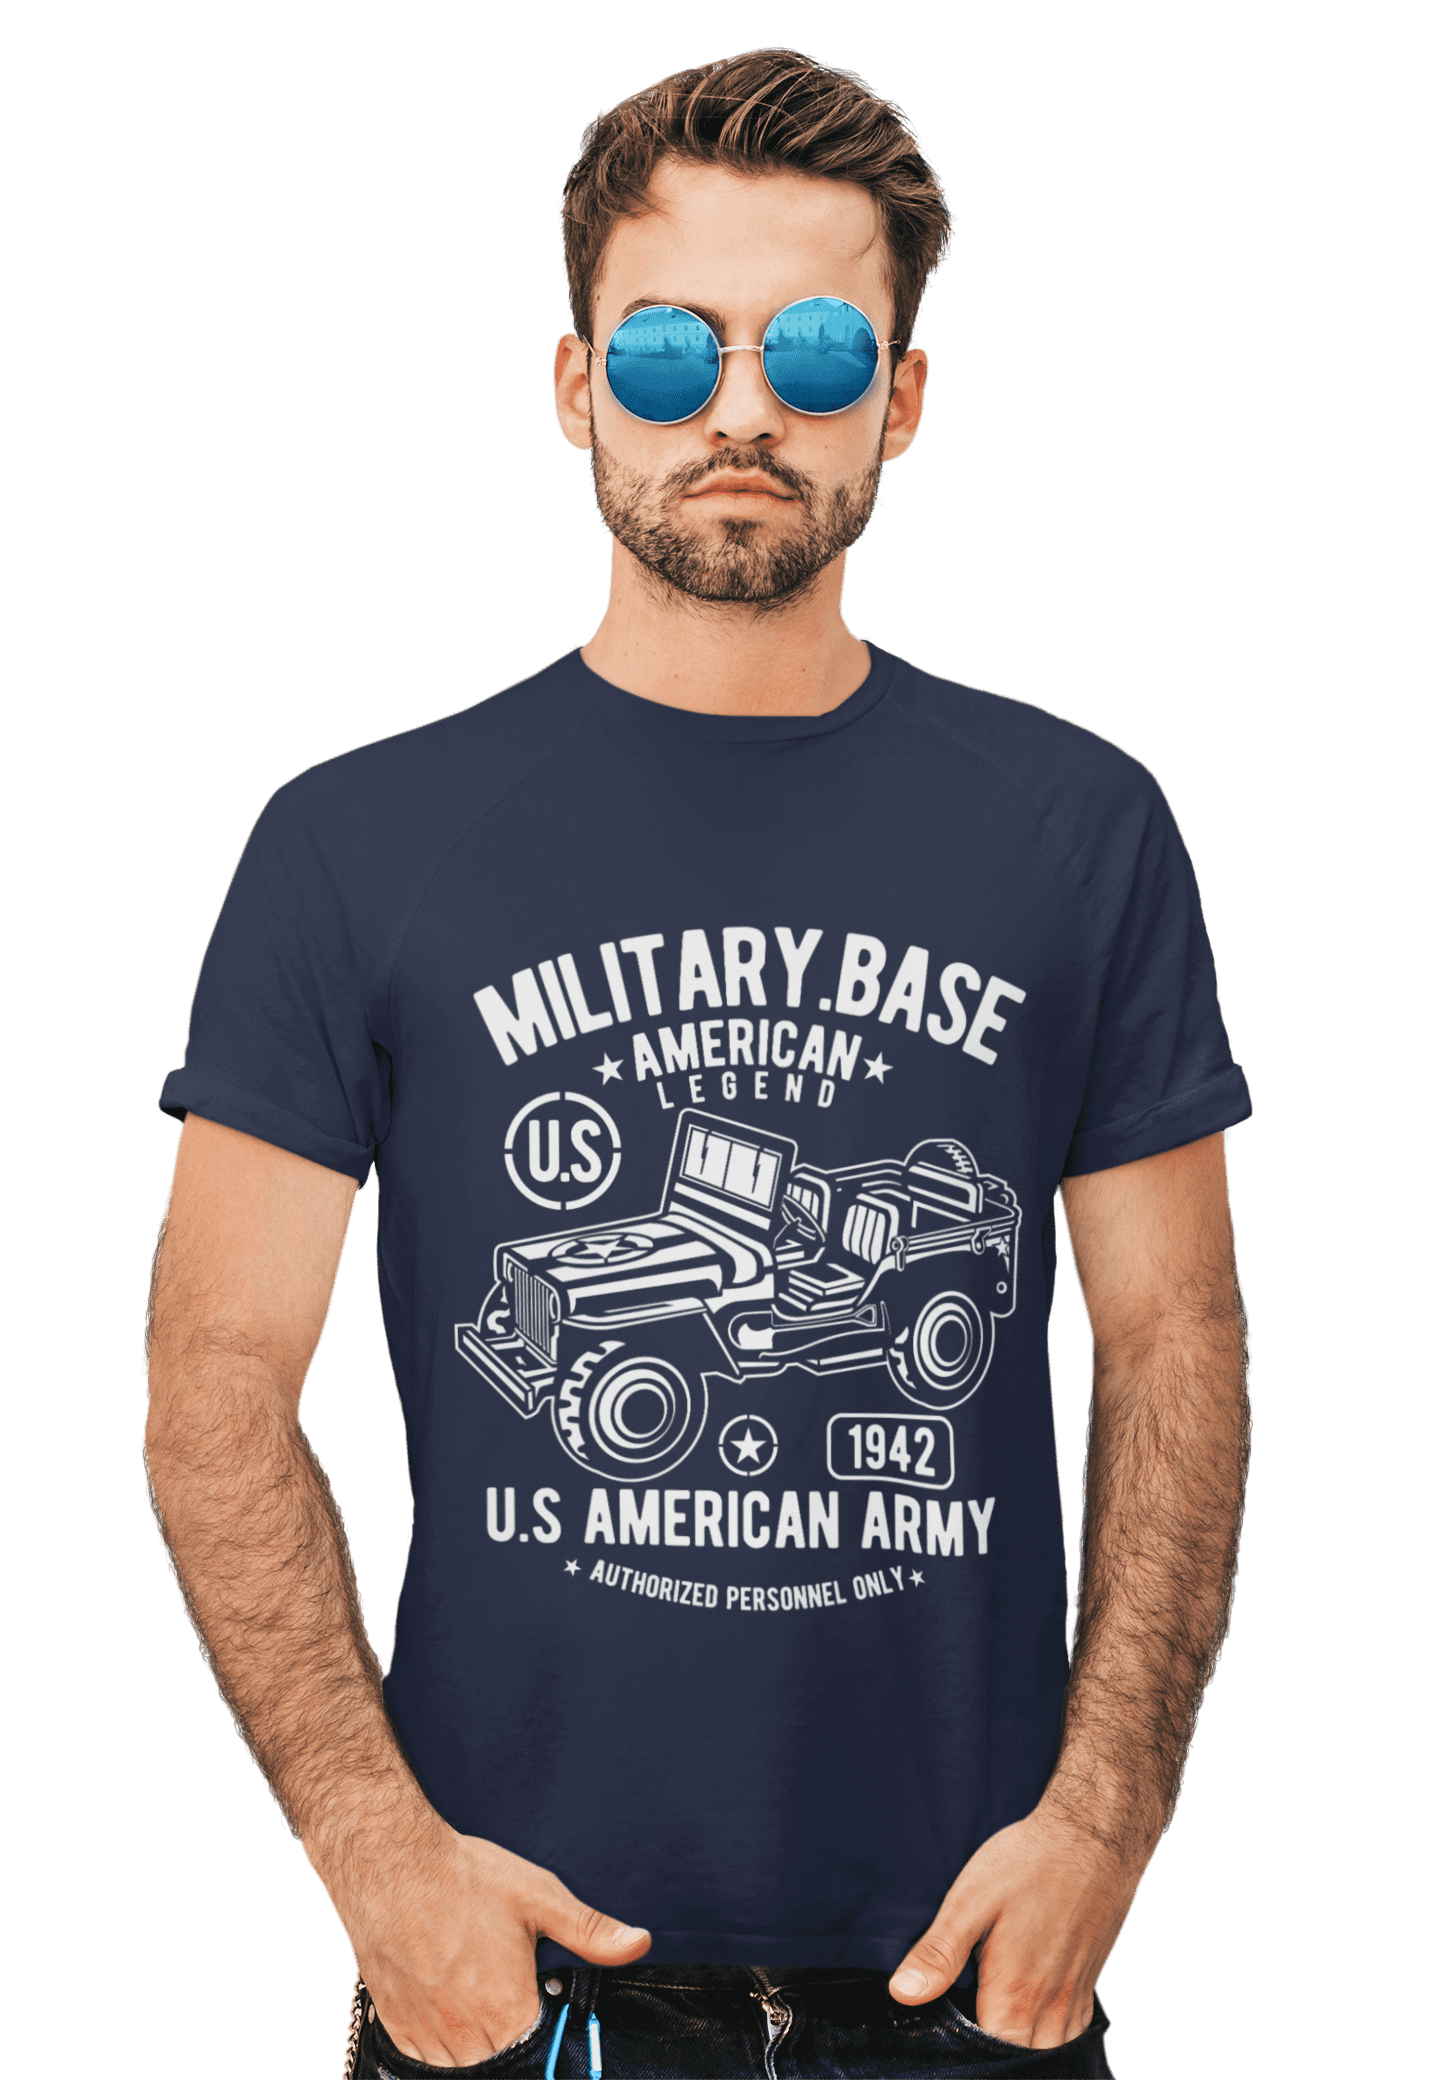 kaos military base american legend